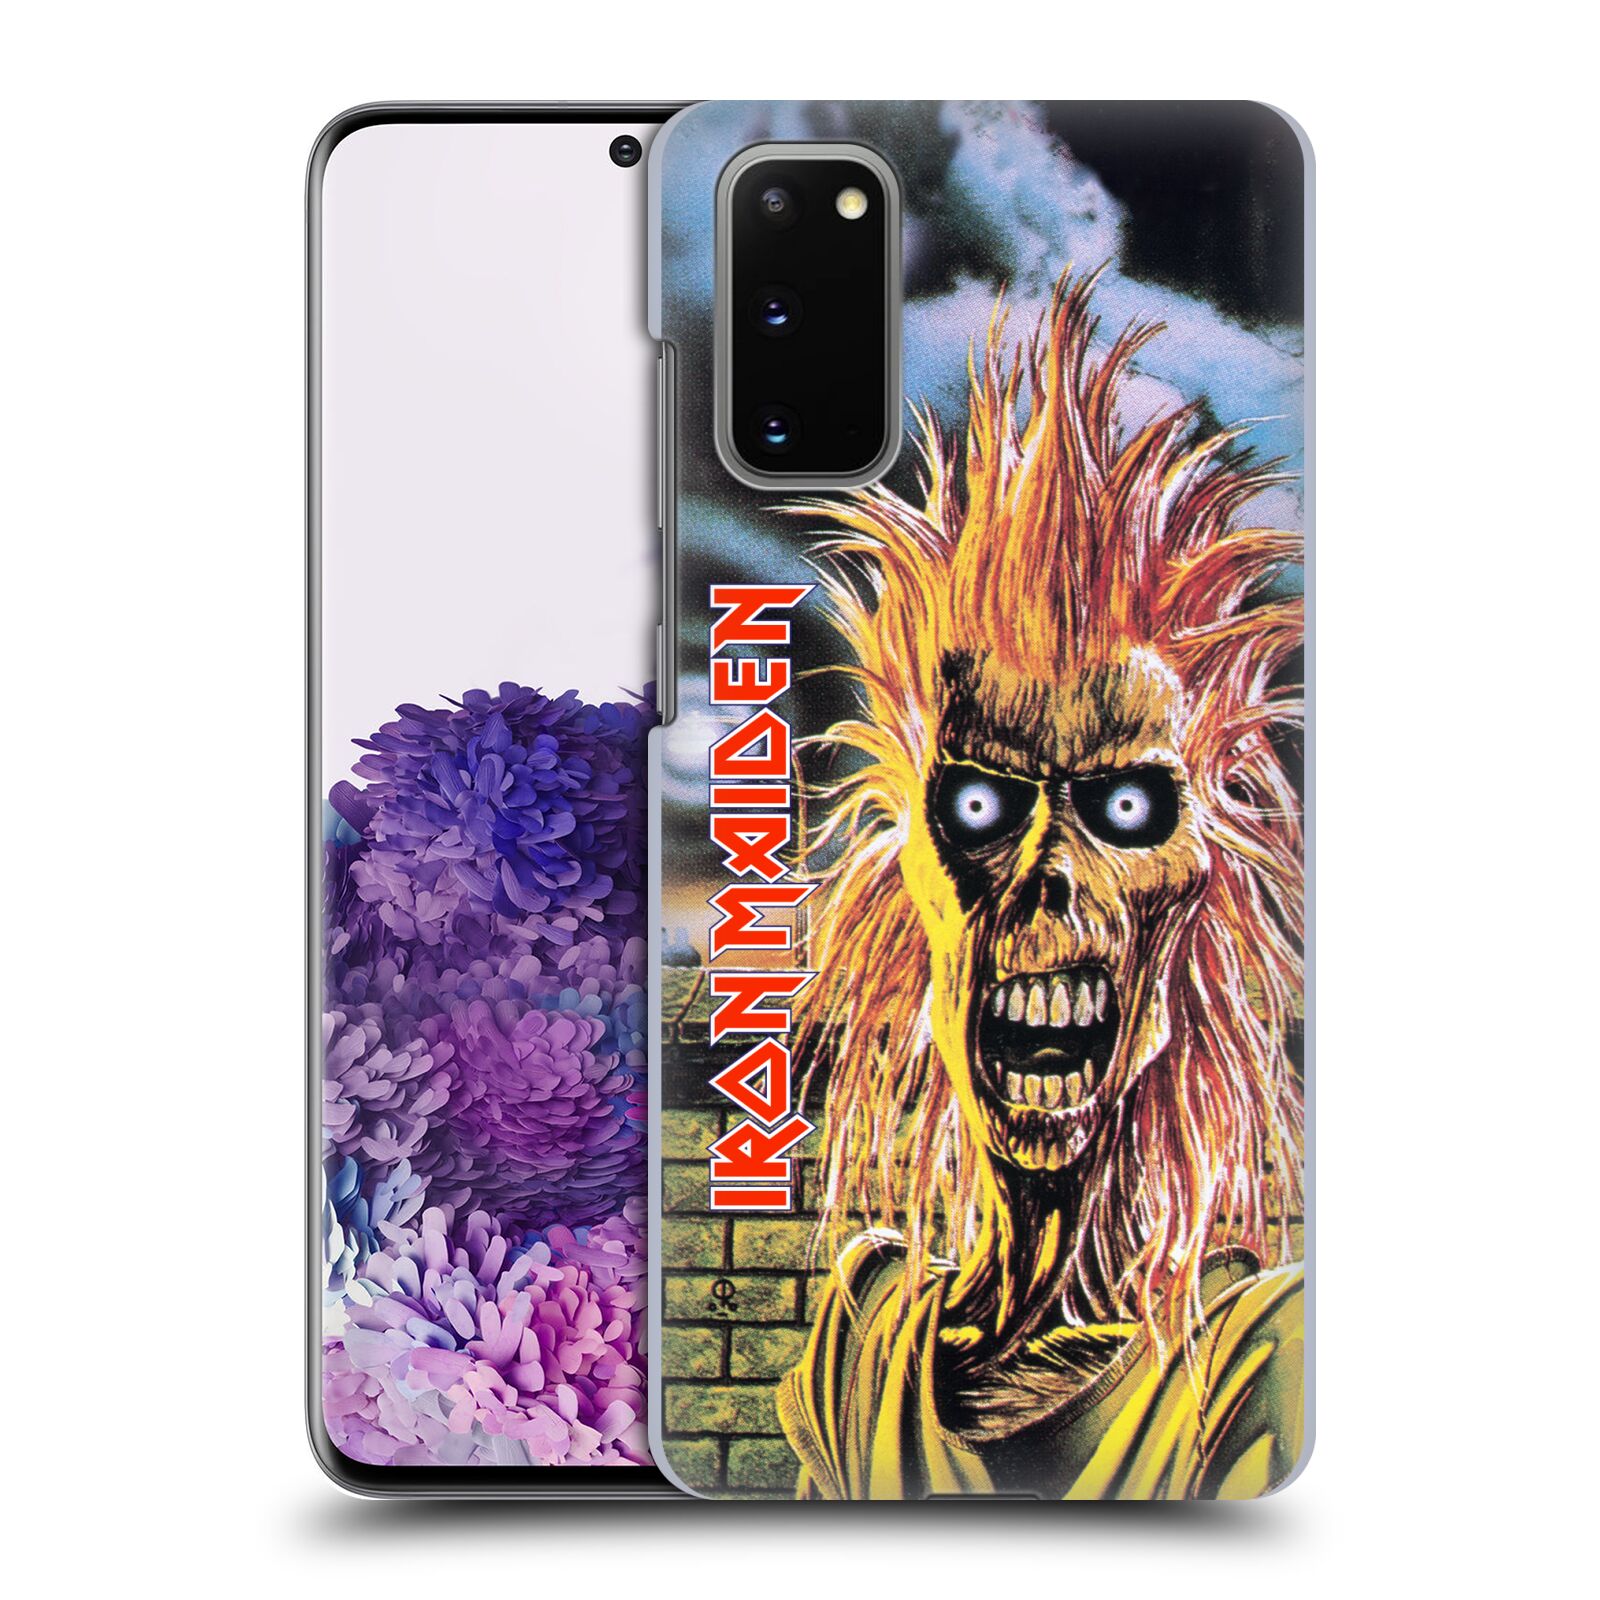 Pouzdro na mobil Samsung Galaxy S20 - HEAD CASE - Heavymetalová skupina Iron Maiden punker